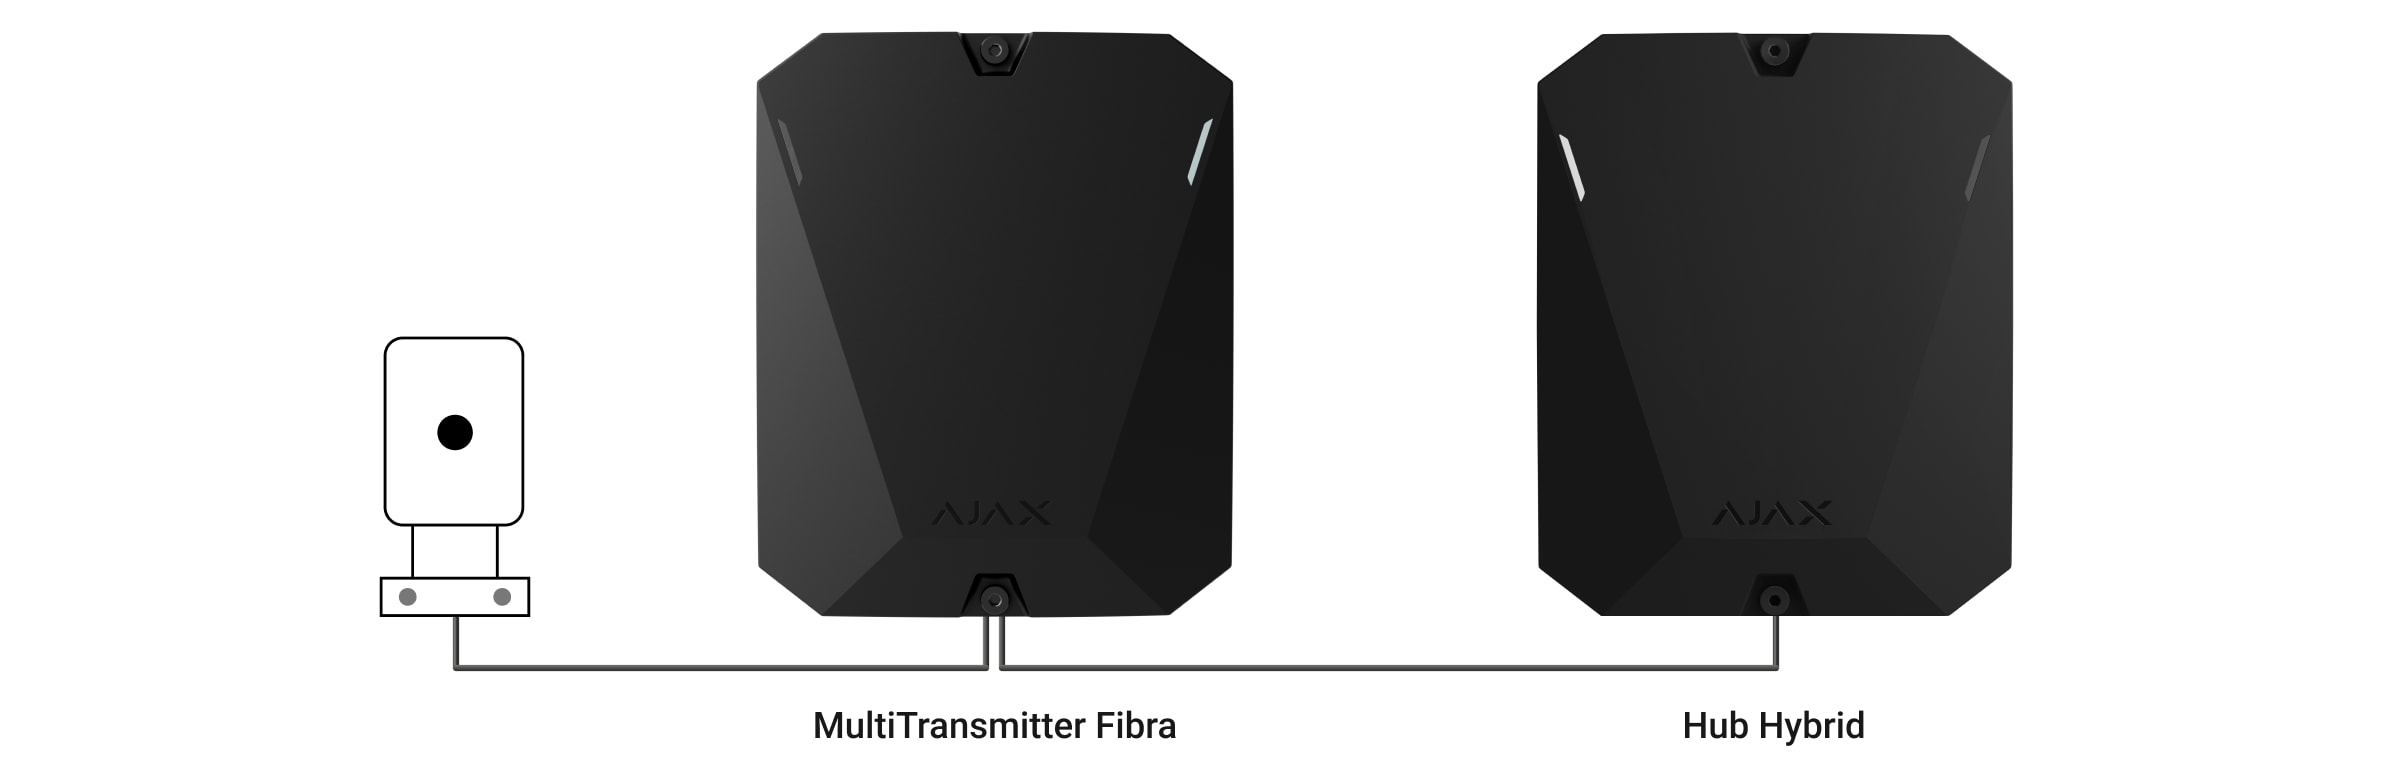 ajax multiyransmitter fibra